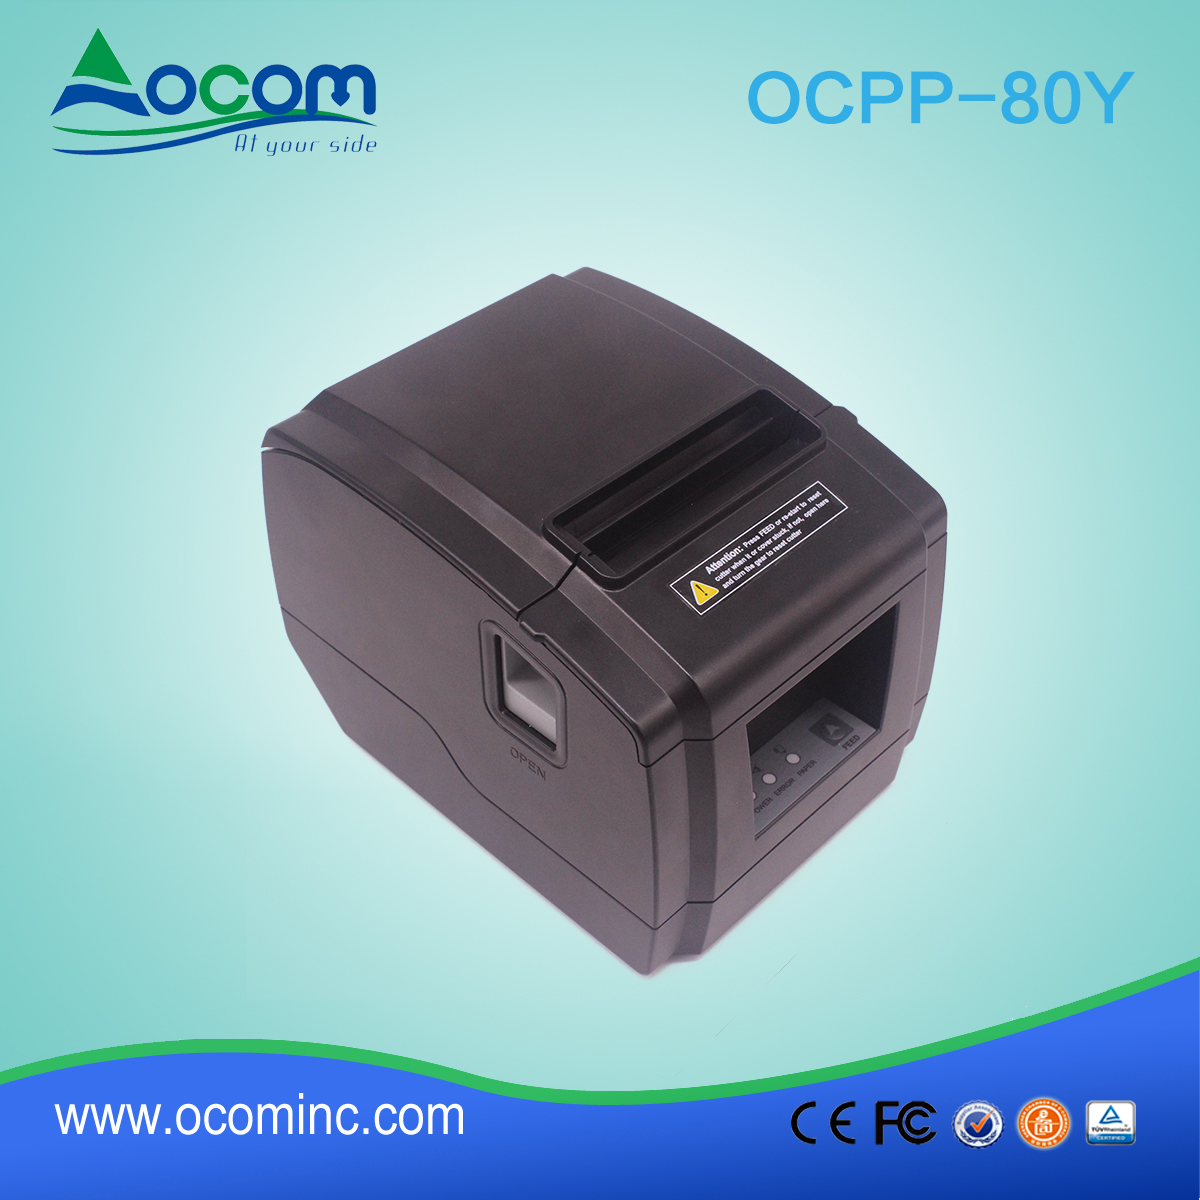 Imprimante de reçu thermique de 80mm d'OCPP-80Y-bas coût pour la vente en gros